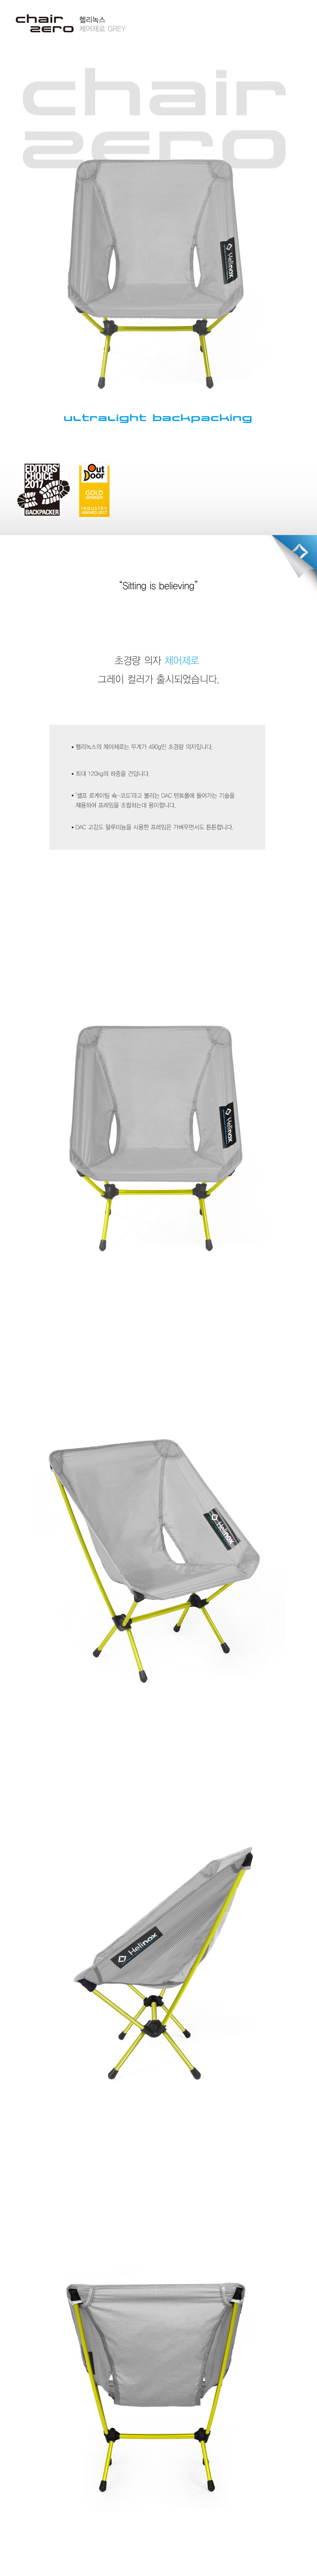 20180116-Chair-Zero-grey-상품페이지-1.jpg